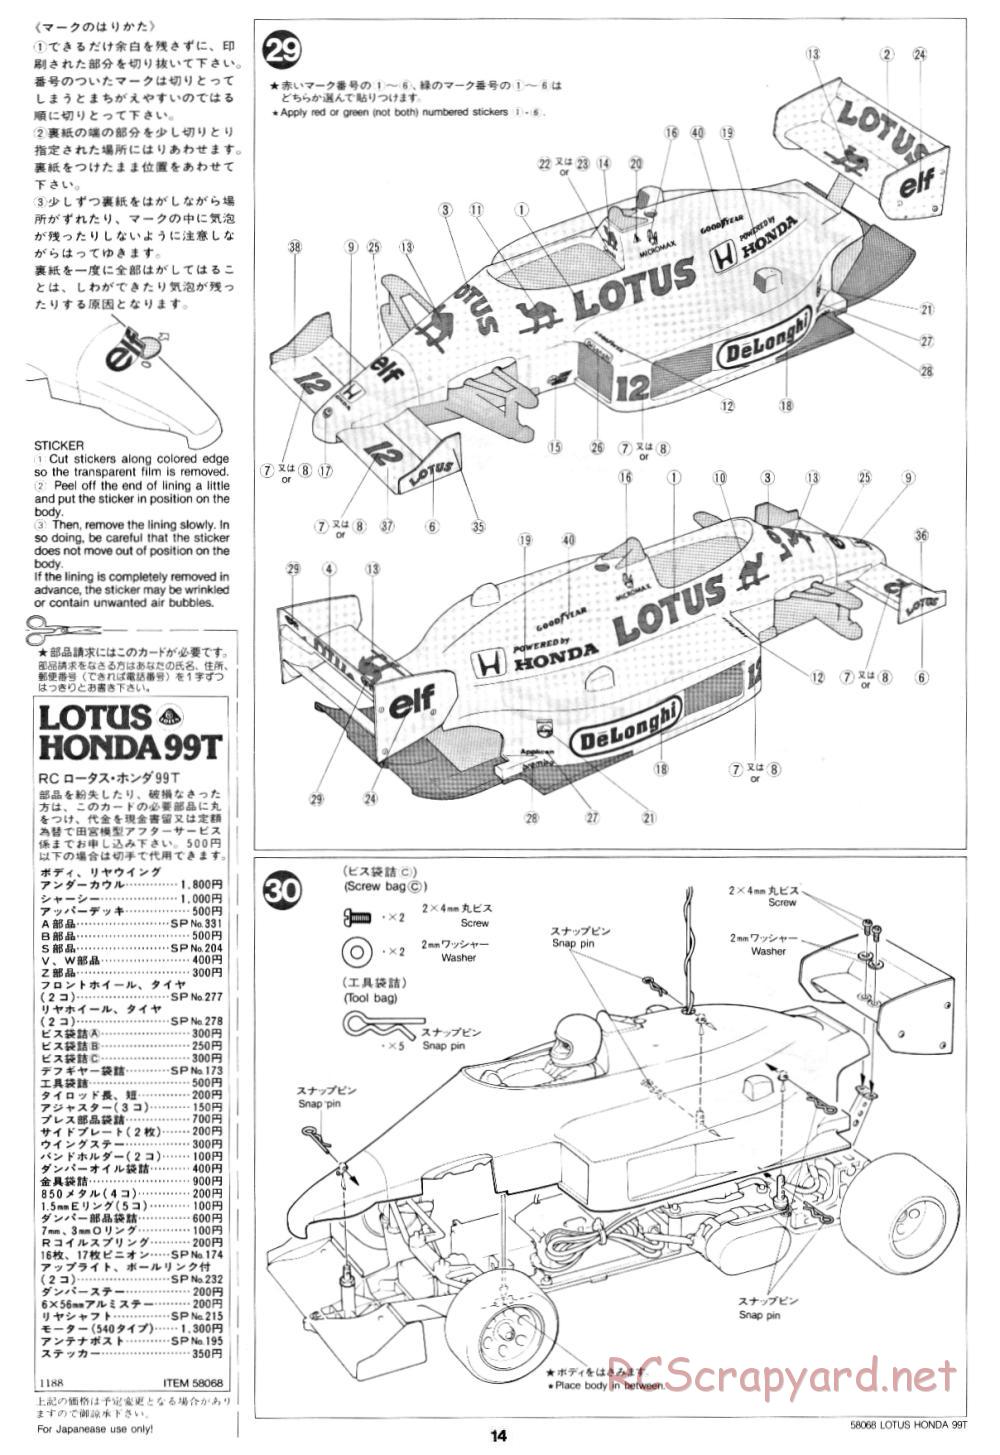 Tamiya - Lotus Honda 99T - 58068 - Manual - Page 14